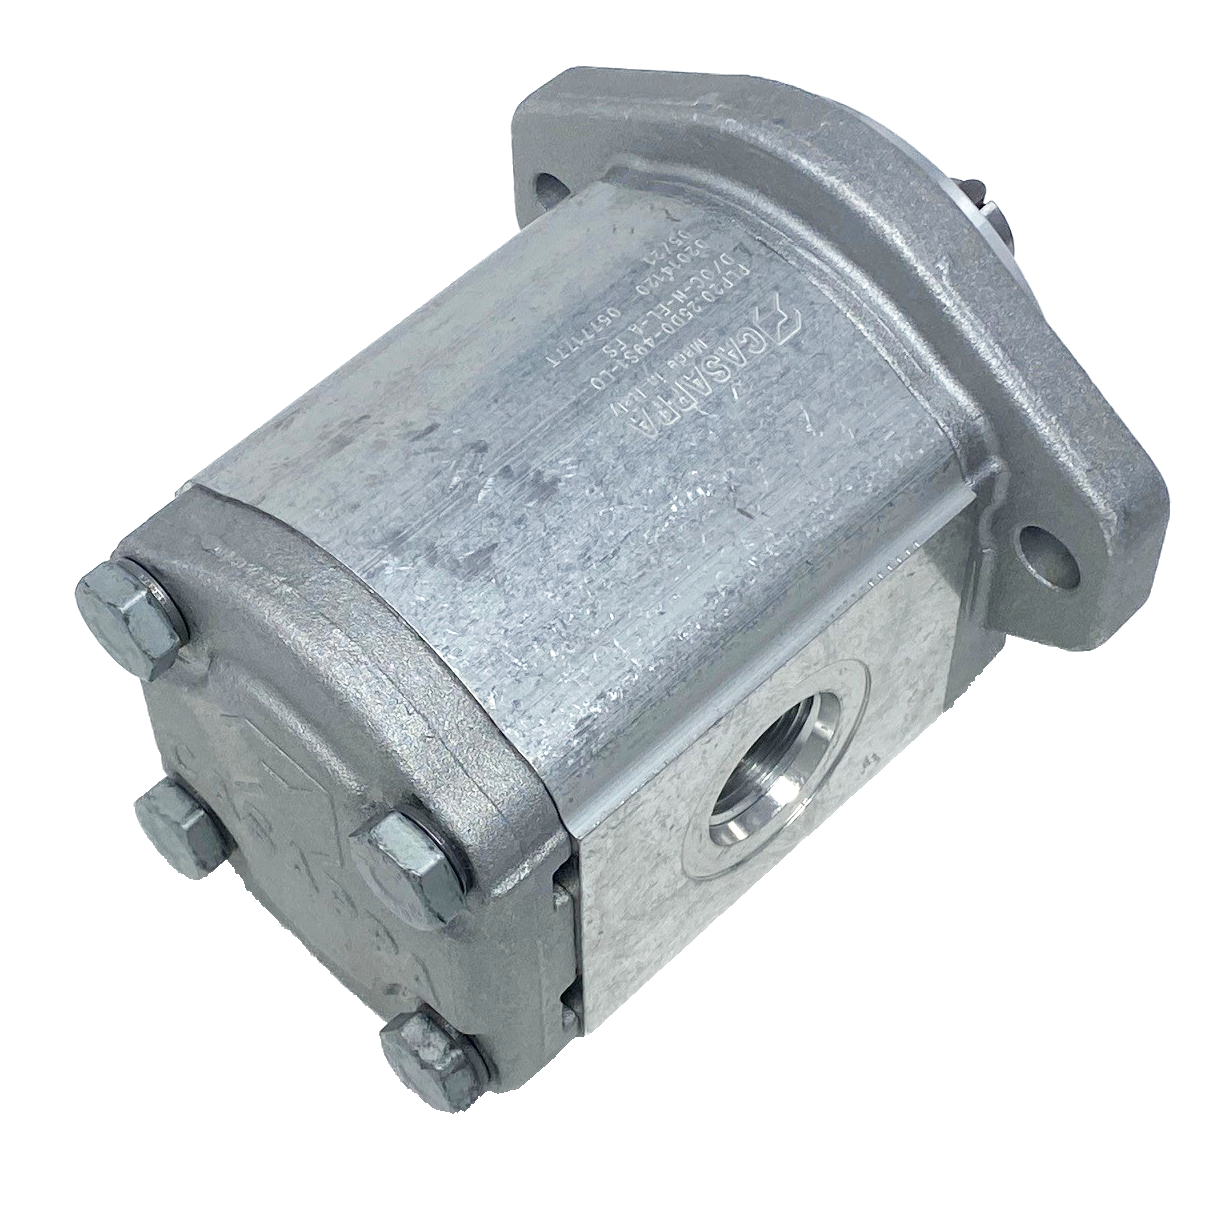 PHM20.31,5R0-50S9-LOC/OG-N-EL : Casappa Polaris Gear Motor, 33.03cc, 2900psi, 2500RPM, Reversible, External Drain, 3/4" Bore x 3/16" Key Shaft, SAE A 2-Bolt Flange, 0.625 (5/8") #10 SAE In, 1.25" #20 SAE Out, Cast Iron Body, Aluminum Flange